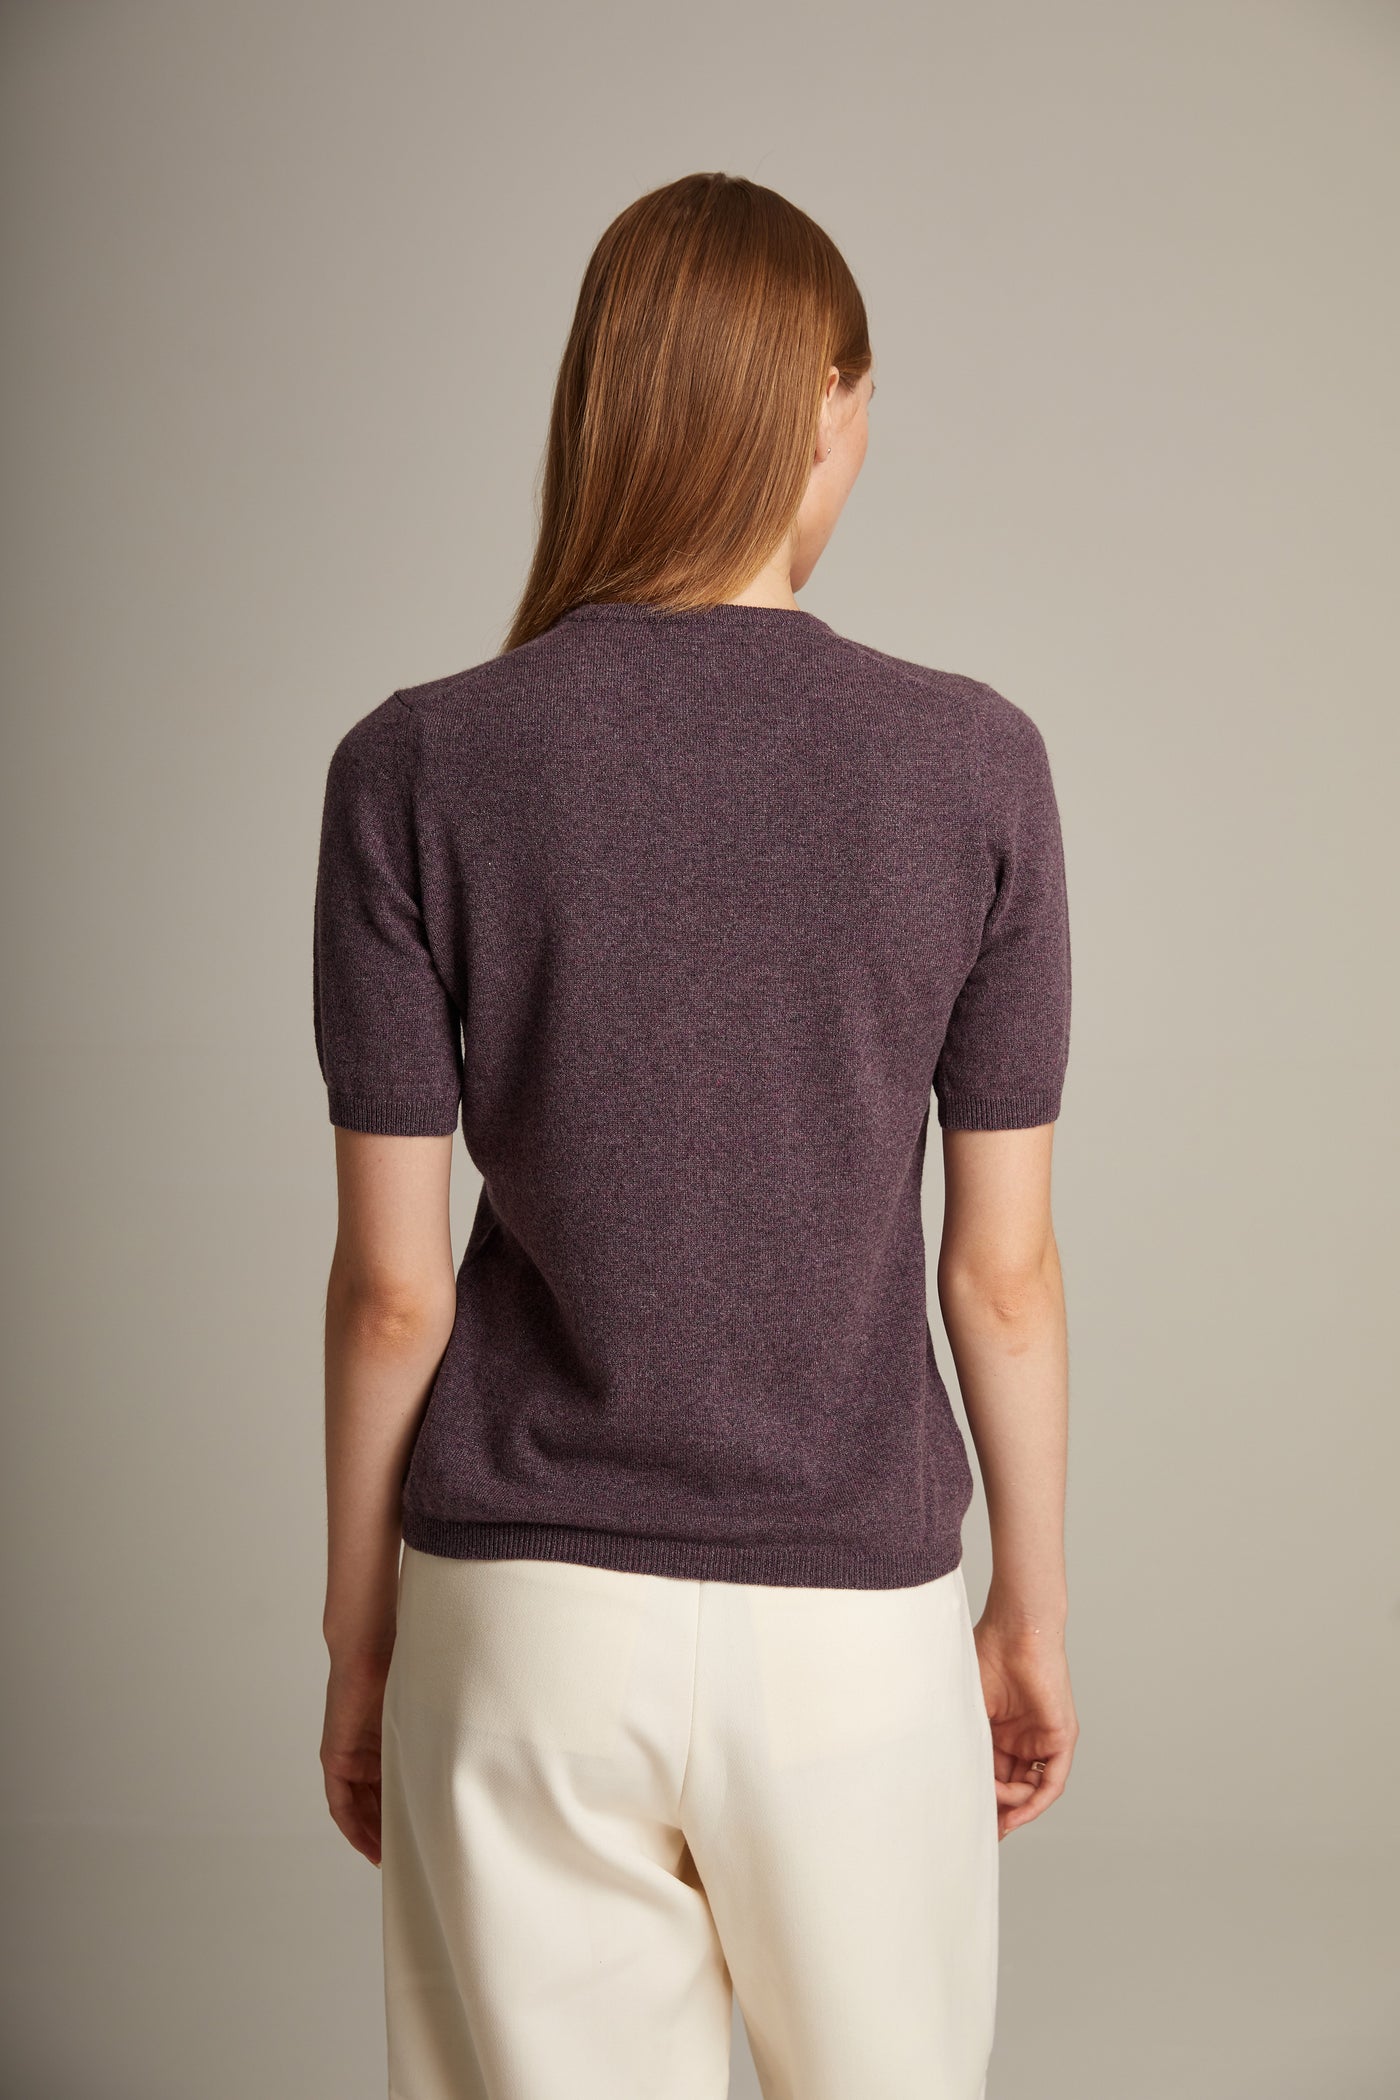 Cashmere Round Neck Short Sleeve Sweater